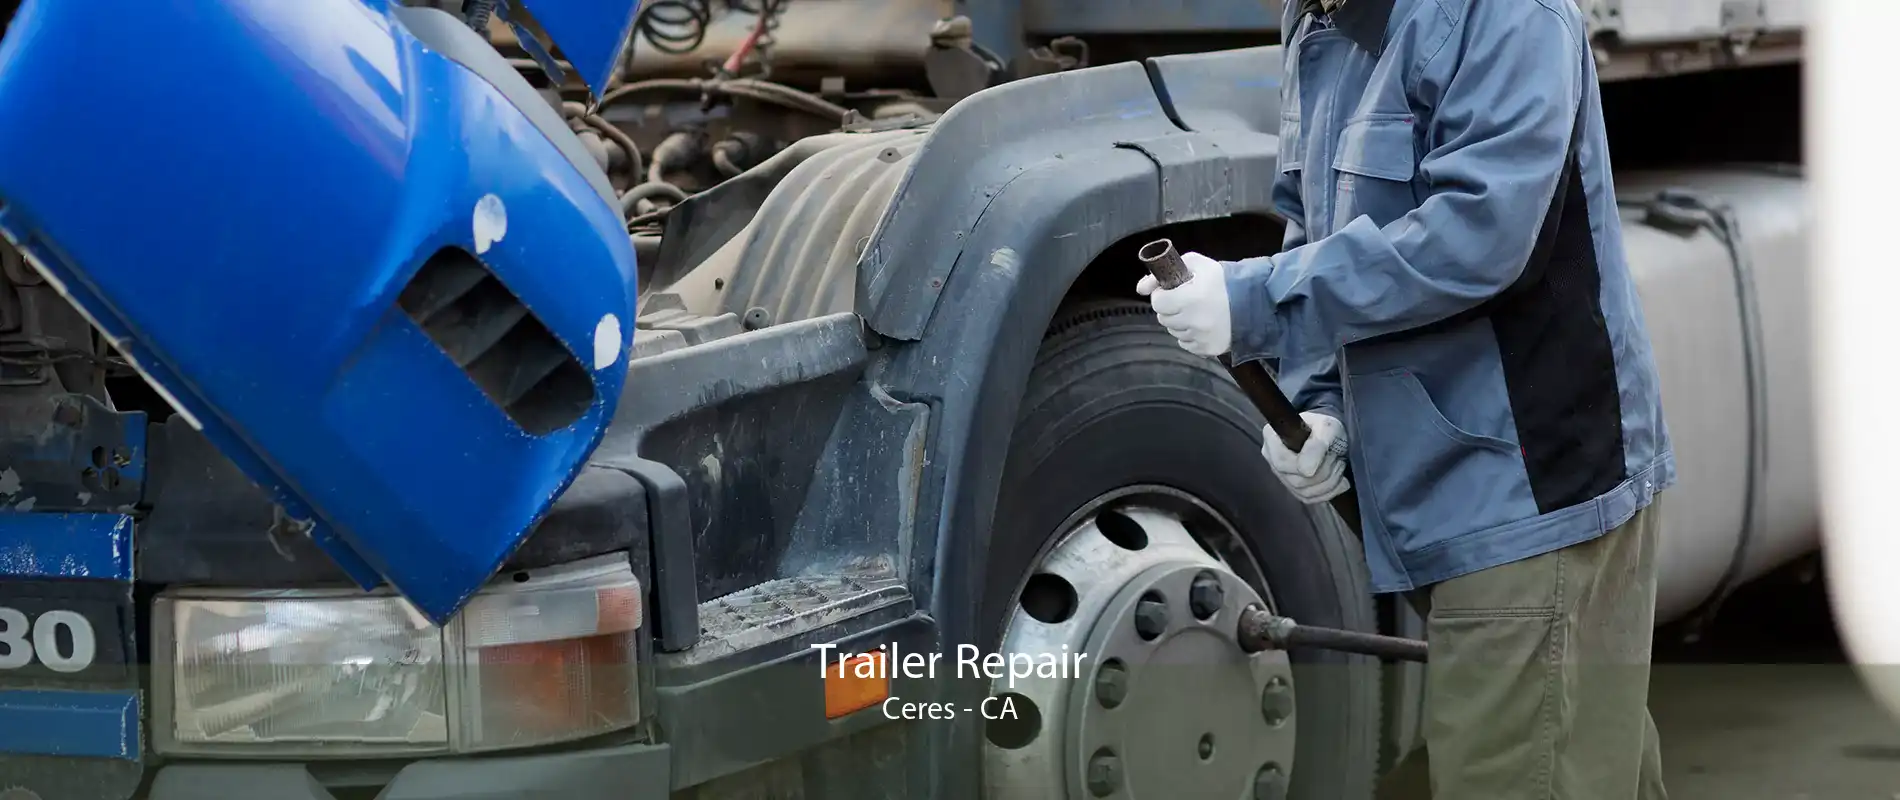 Trailer Repair Ceres - CA